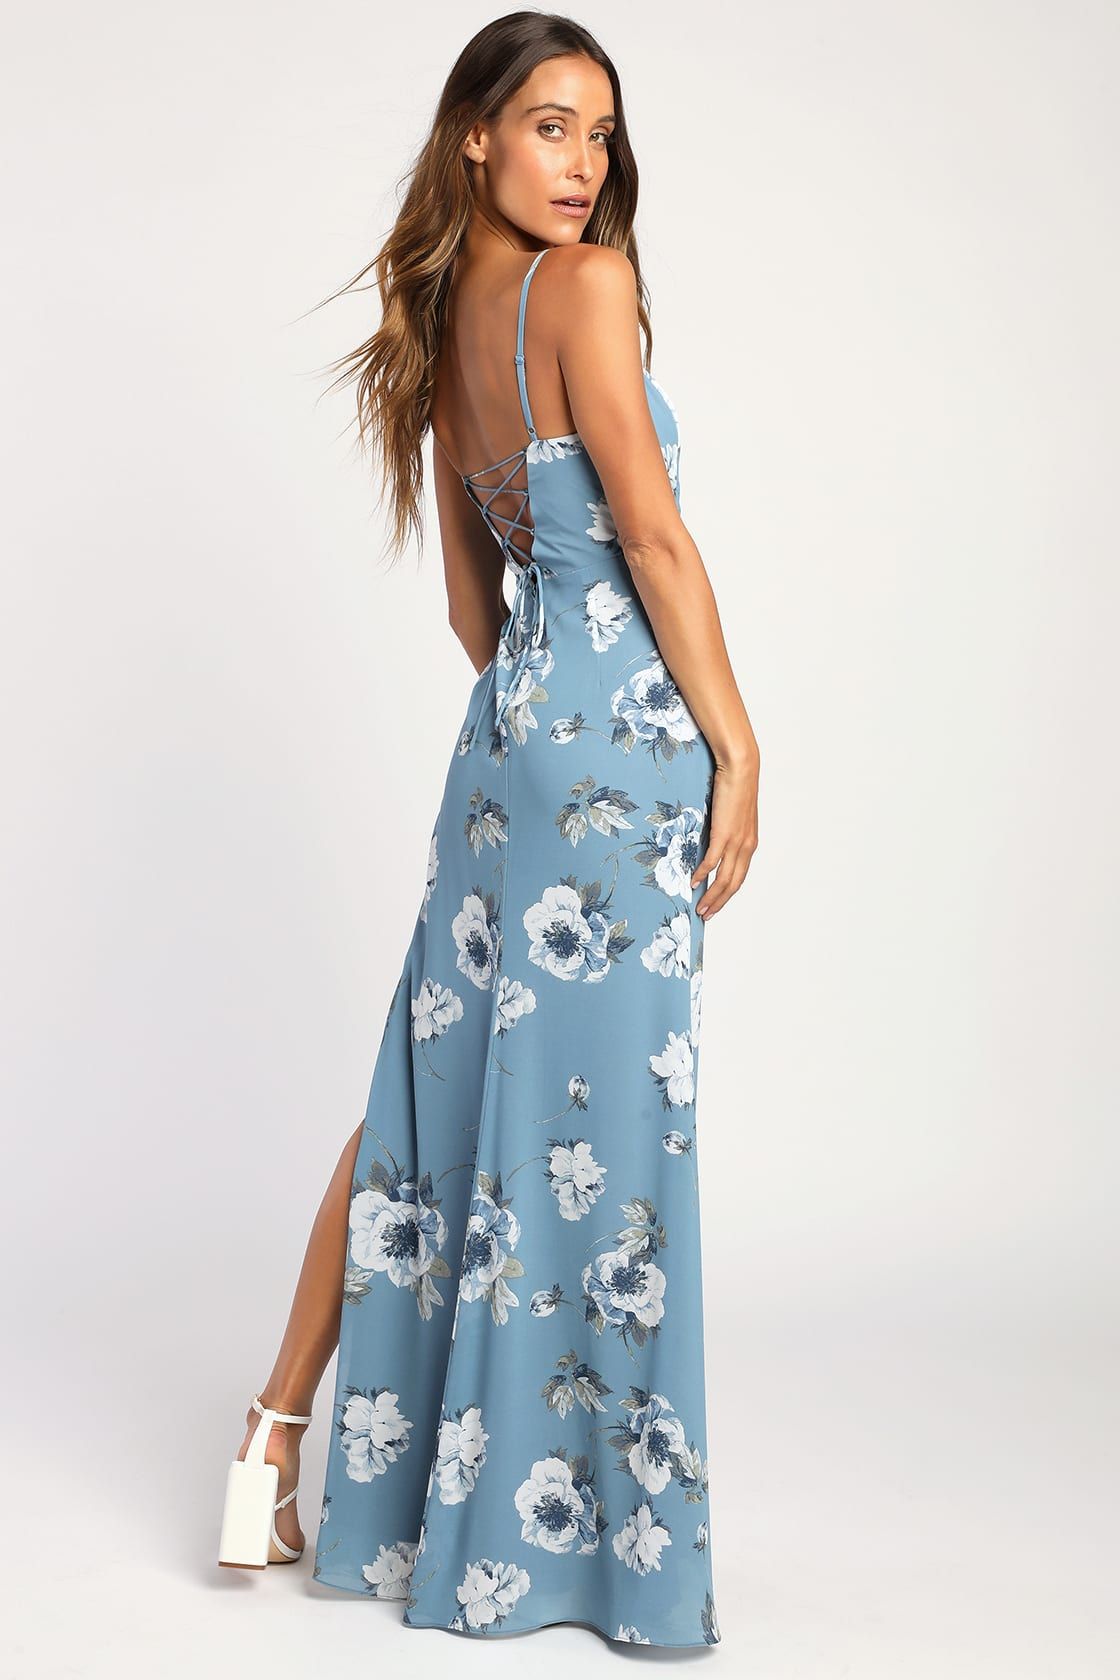 Feeling Elegant Slate Blue Floral Print Lace-Up Slit Maxi Dress | Lulus